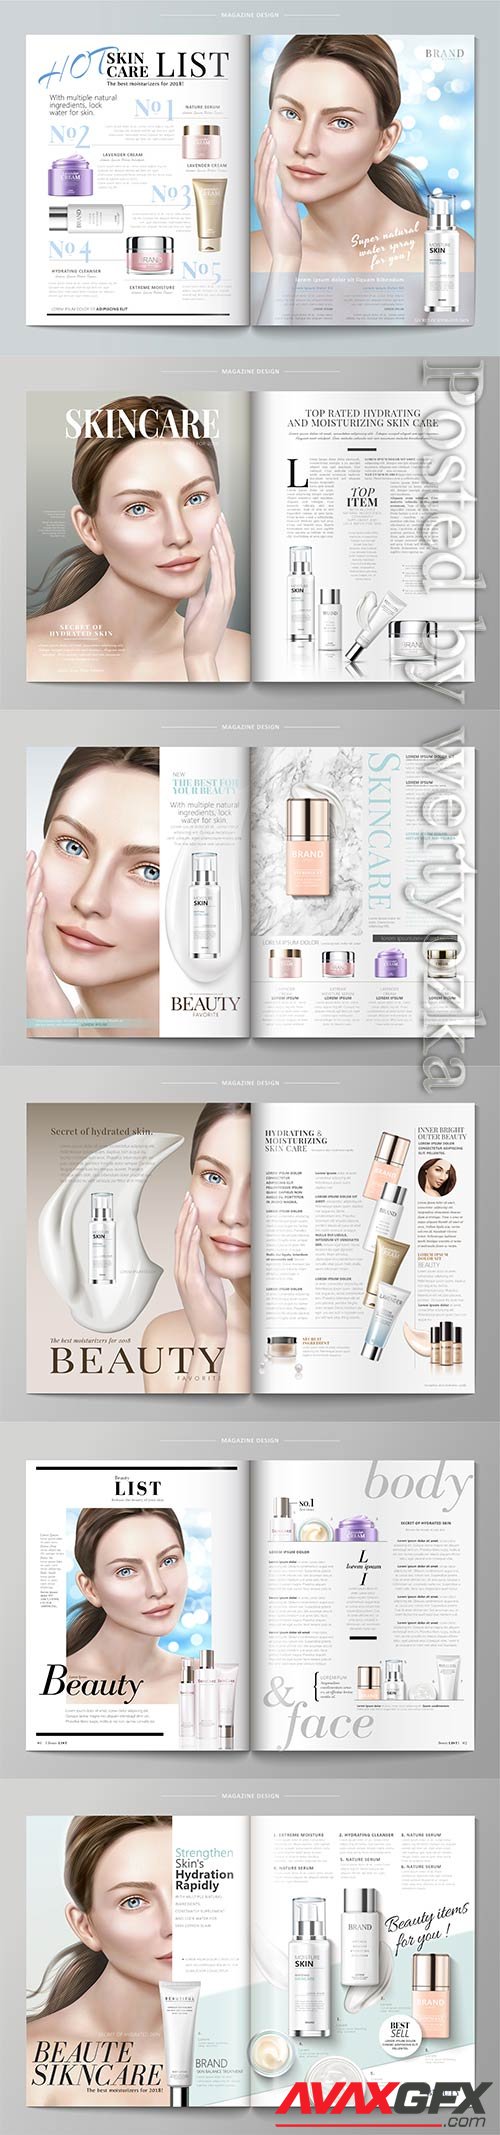 Elegant skin care magazine vector template